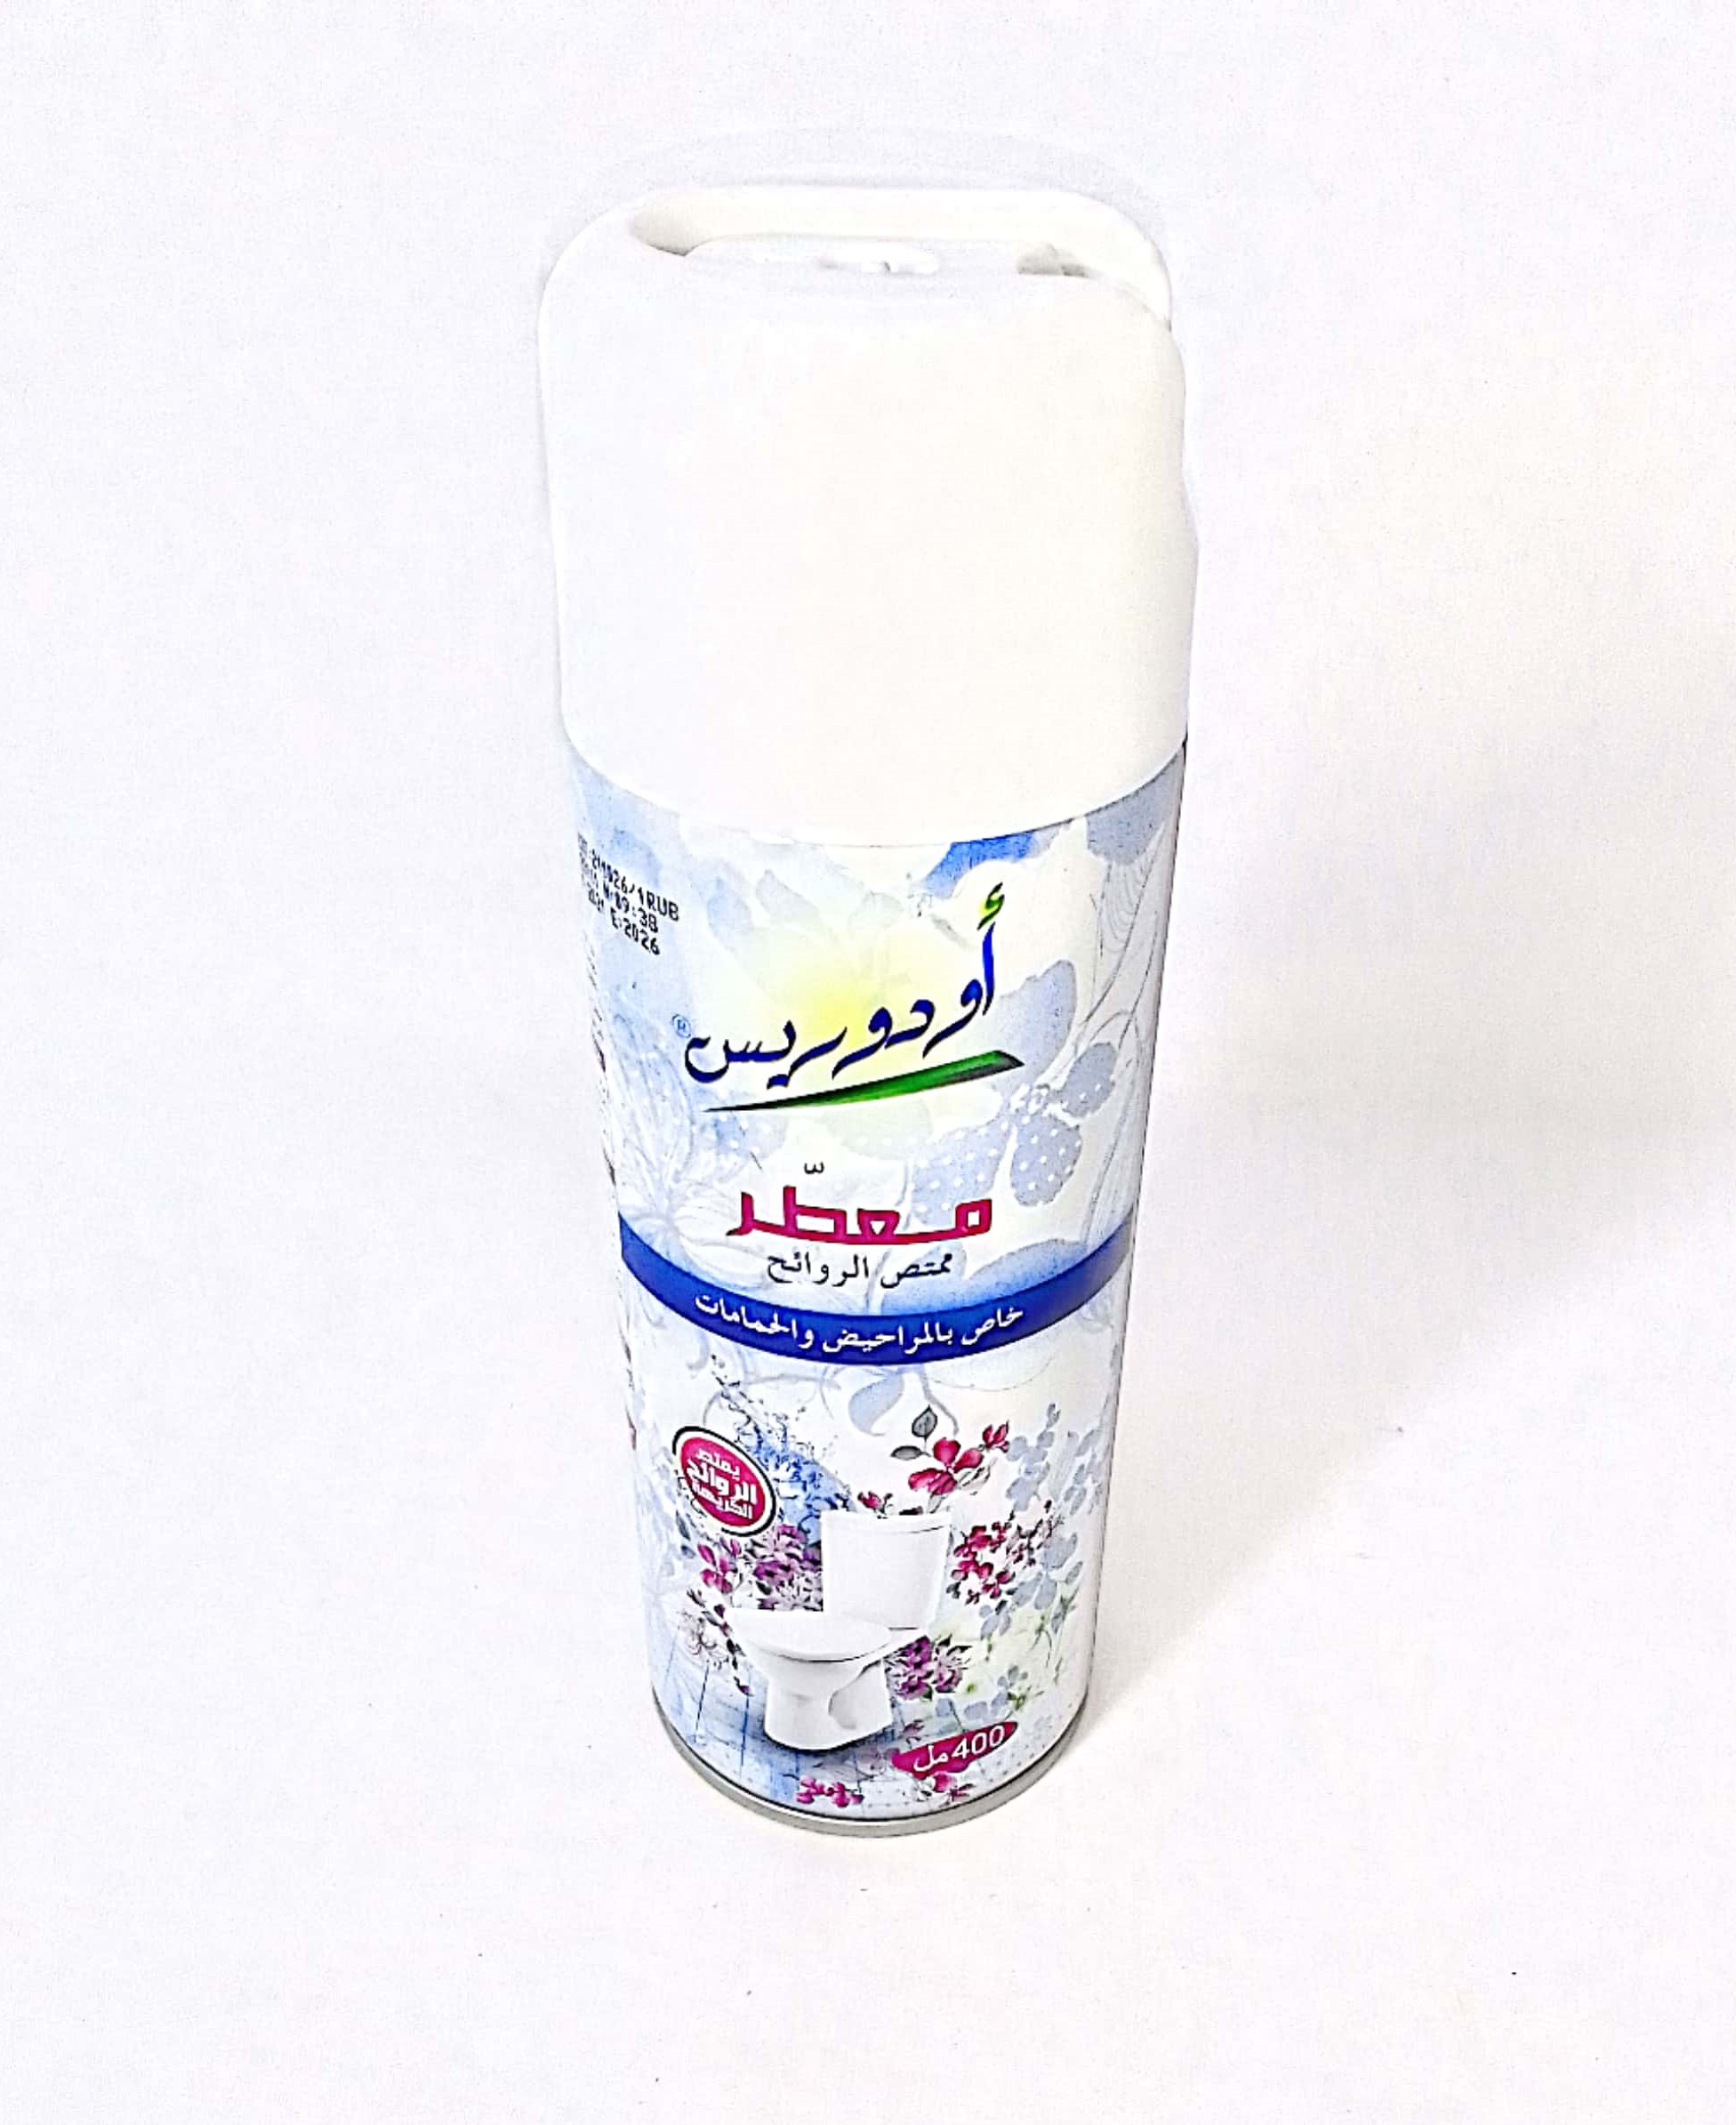 Désodorisant - Odoris - Spécial sanitaires - blanc - 400ml